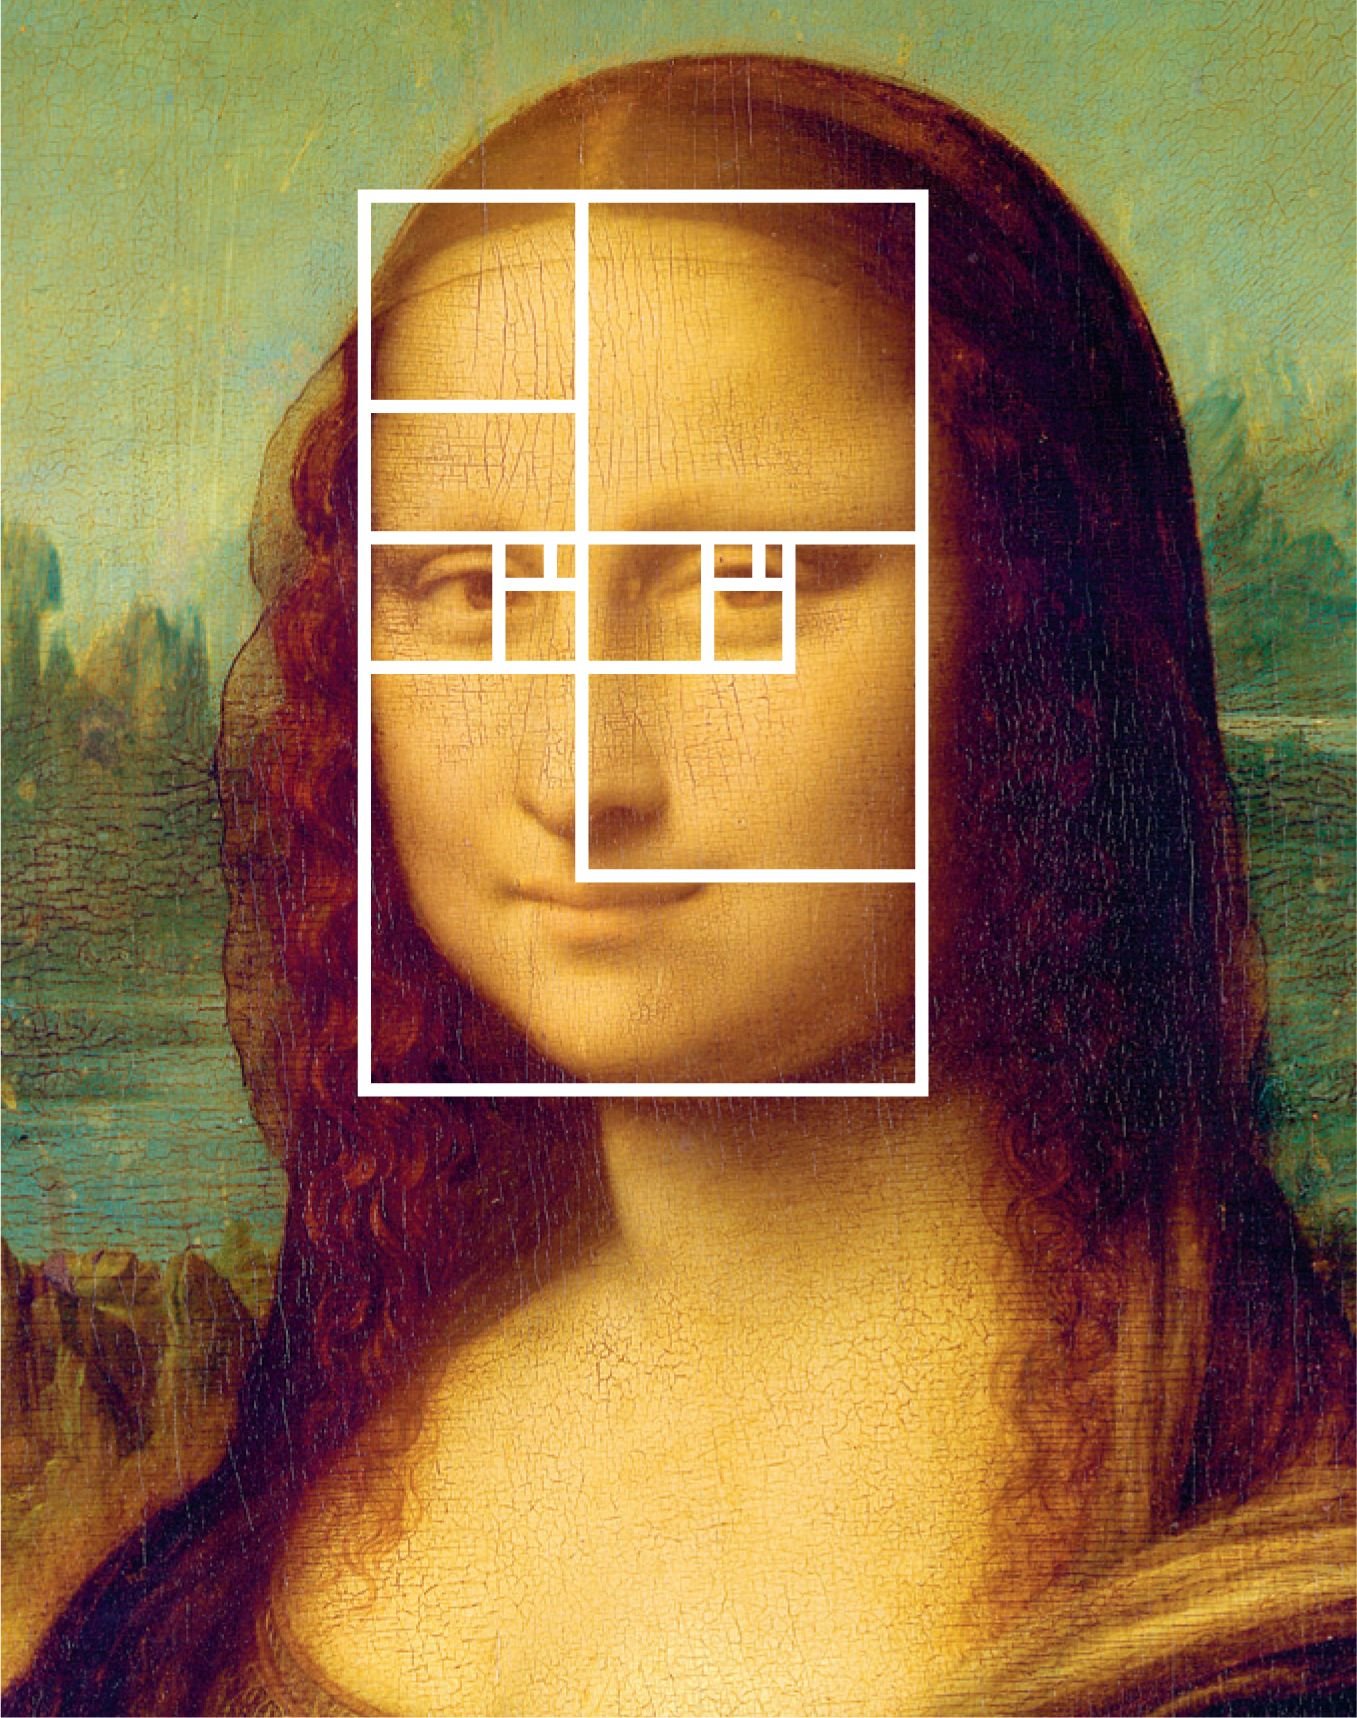 Мона лиза золотое сечение фото